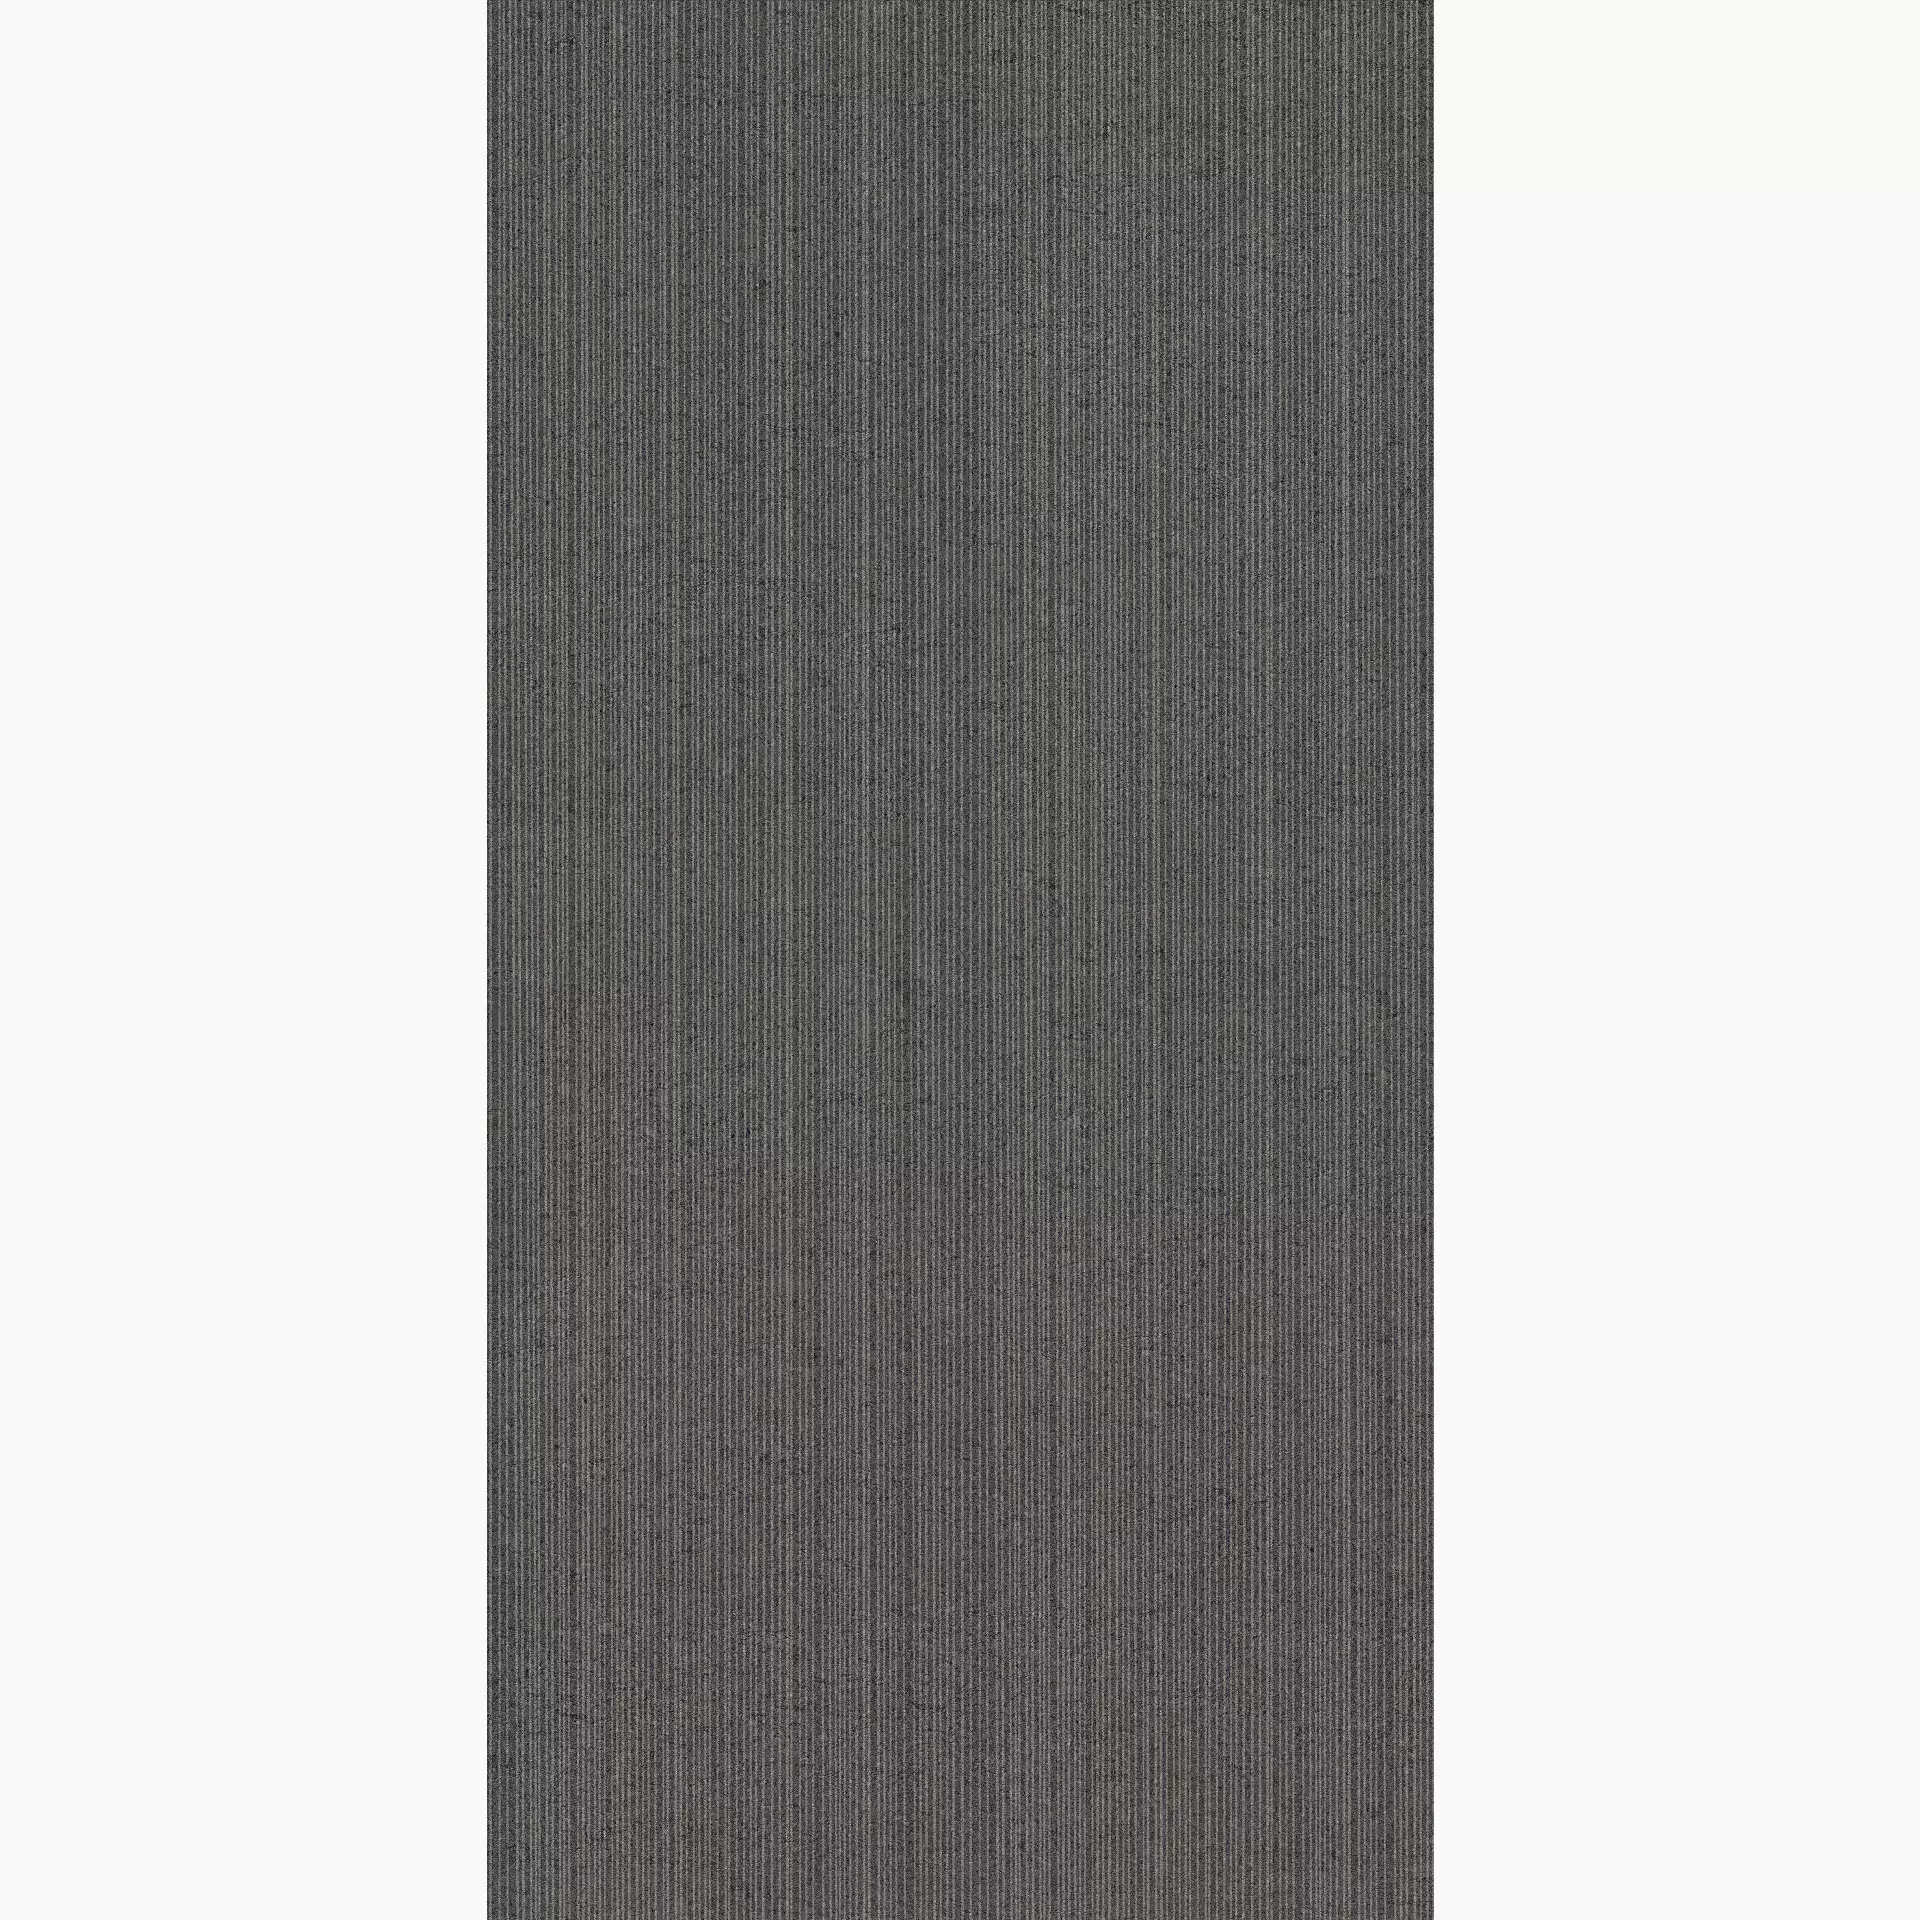 Coem Tweed Stone Black Naturale Straight TWS367R 30x60cm rectified 9mm